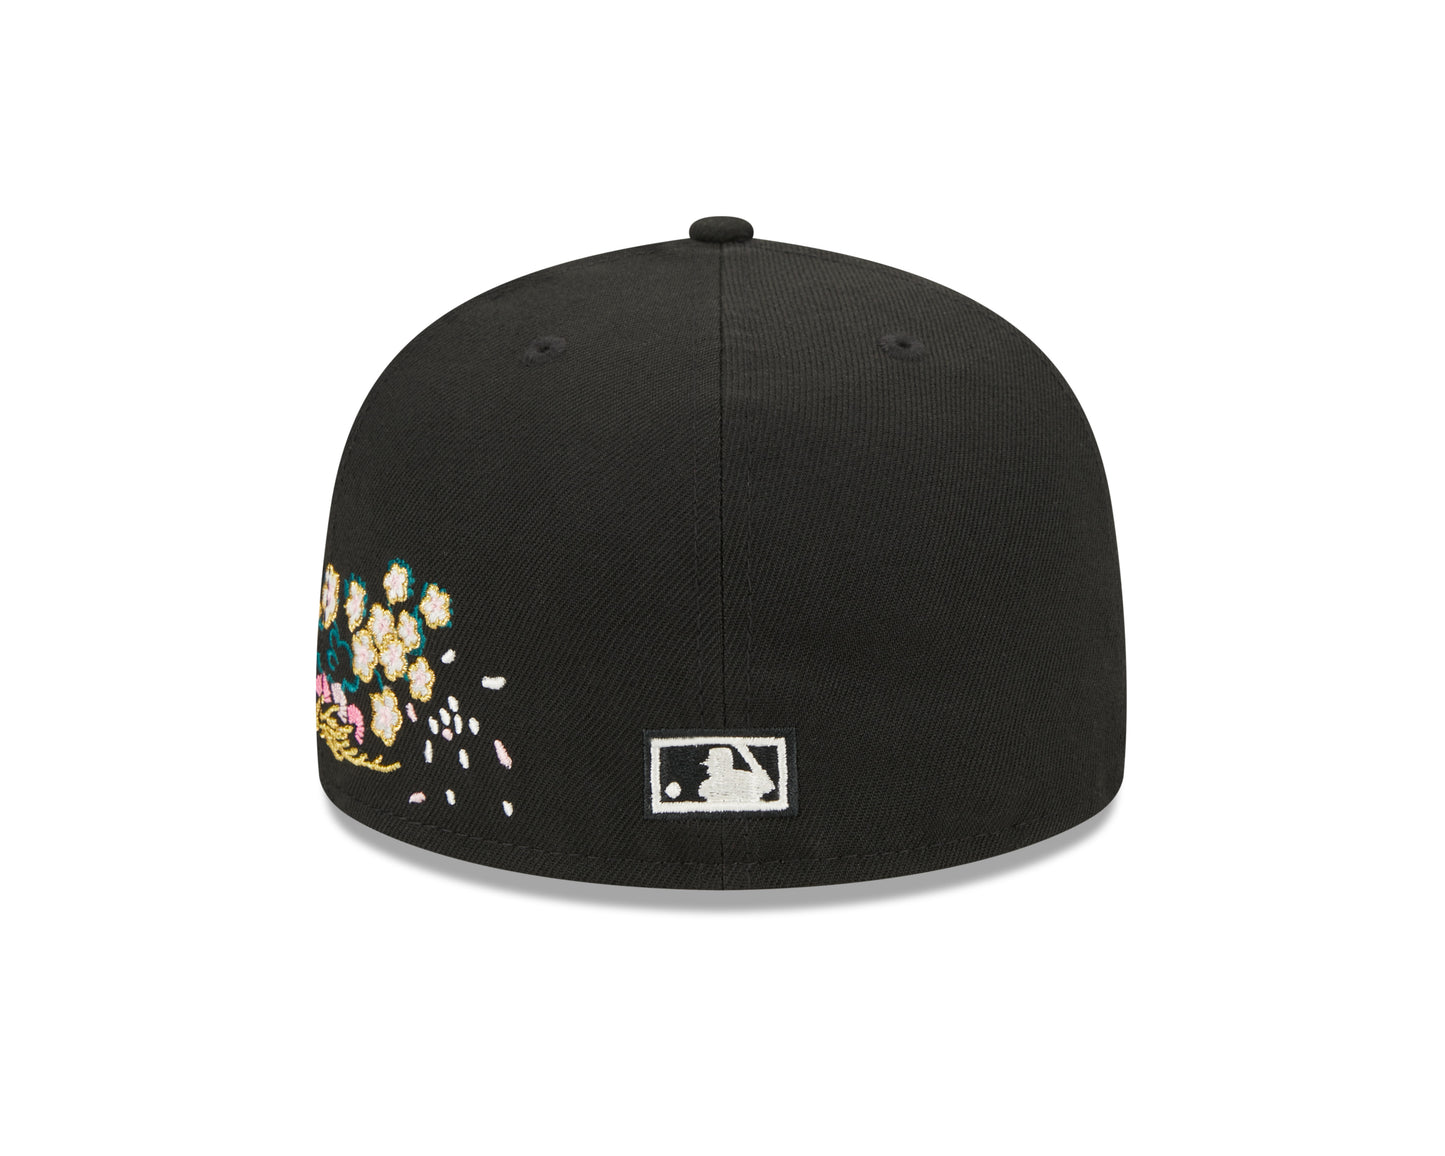 NEW ERA 59FIFTY MLB ARIZONA DIAMONDBACKS CHERRY BLOSSOM BLACK / GREY UV FITTED CAP